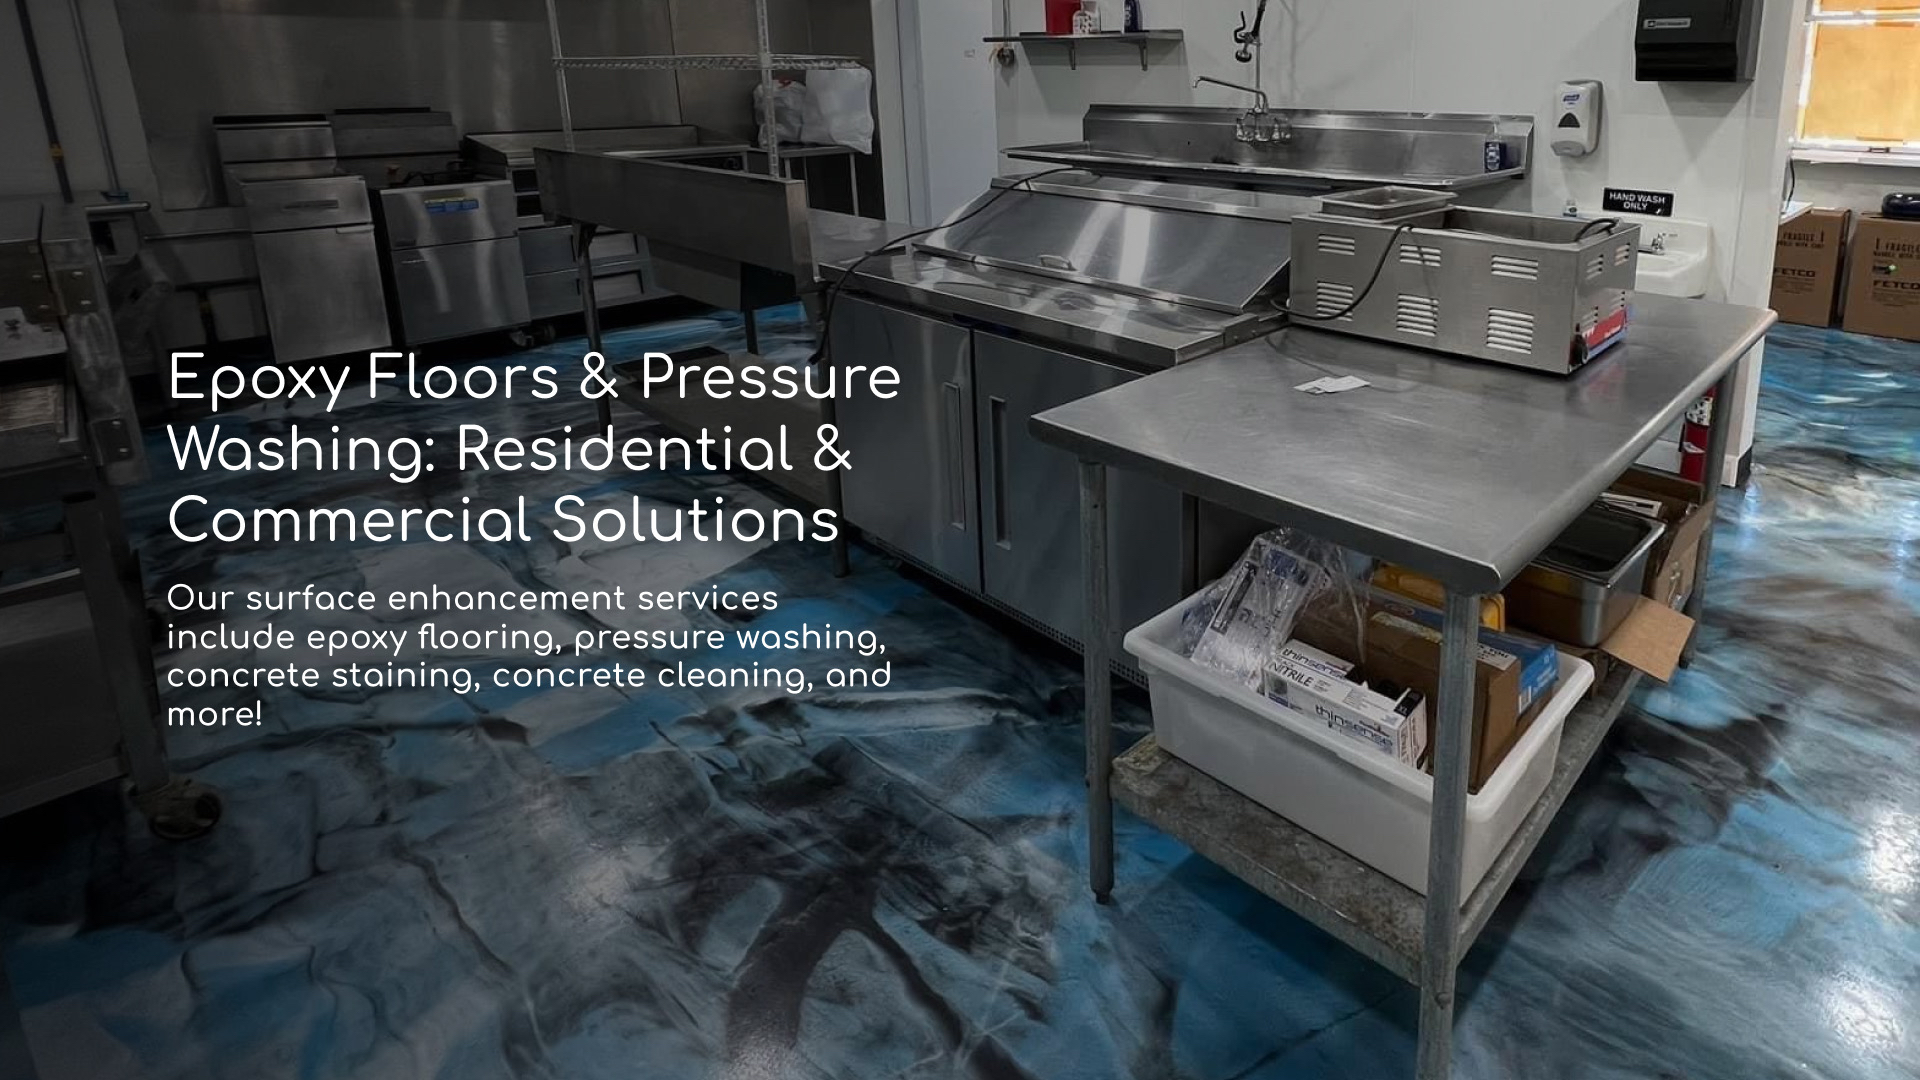 STL-Services Pressure Washing & Epoxy Floor Coating’s